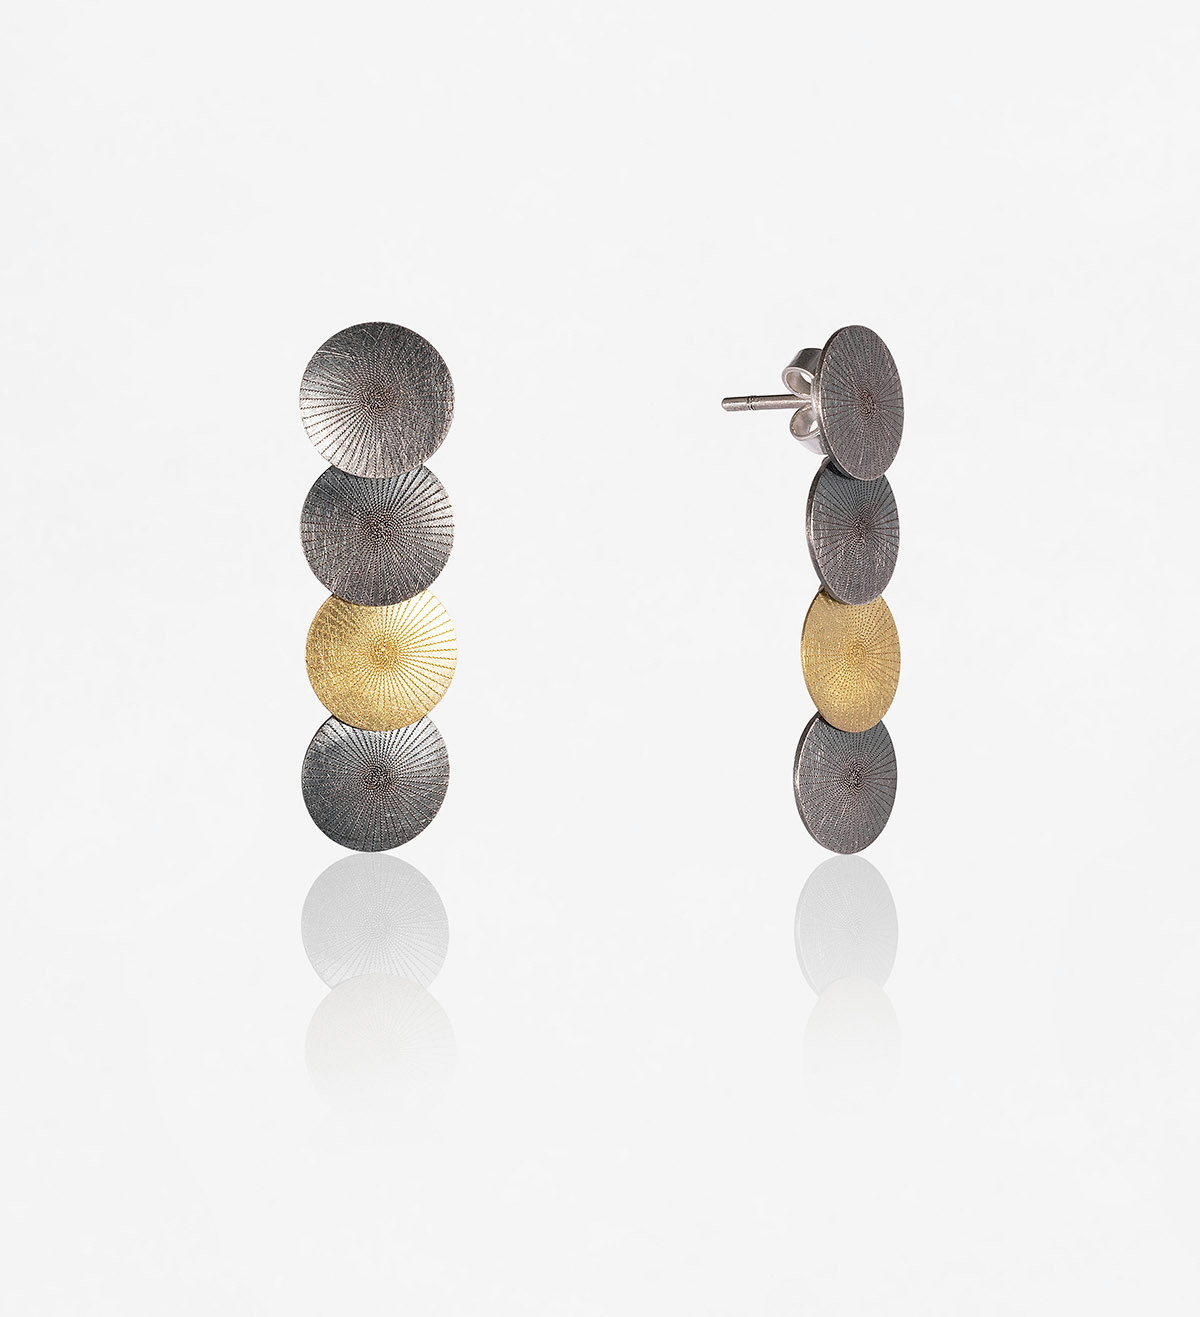 18k gold and silver earrings Samurai 35mm